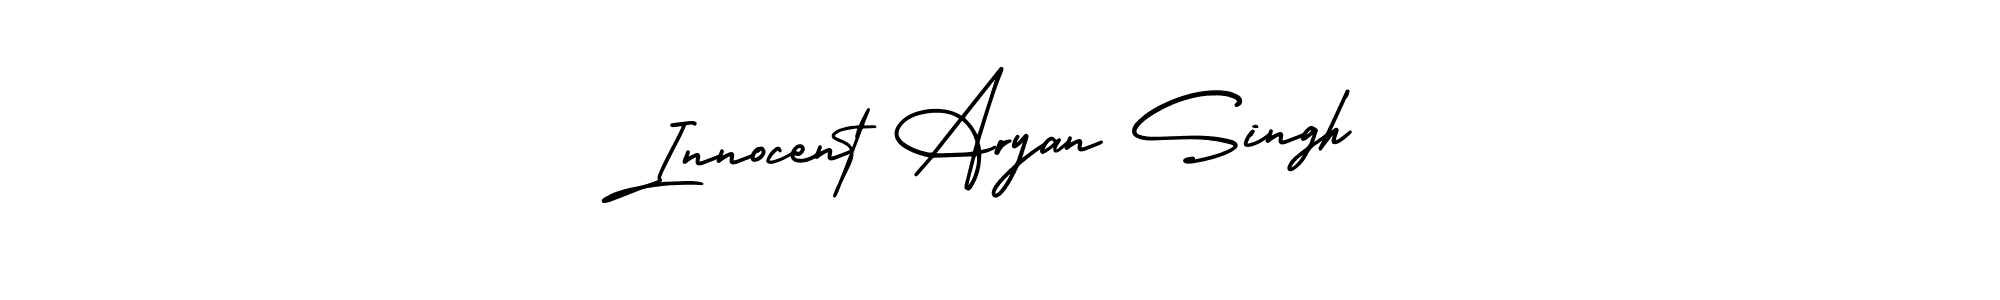 Best and Professional Signature Style for Innocent Aryan Singh. AmerikaSignatureDemo-Regular Best Signature Style Collection. Innocent Aryan Singh signature style 3 images and pictures png